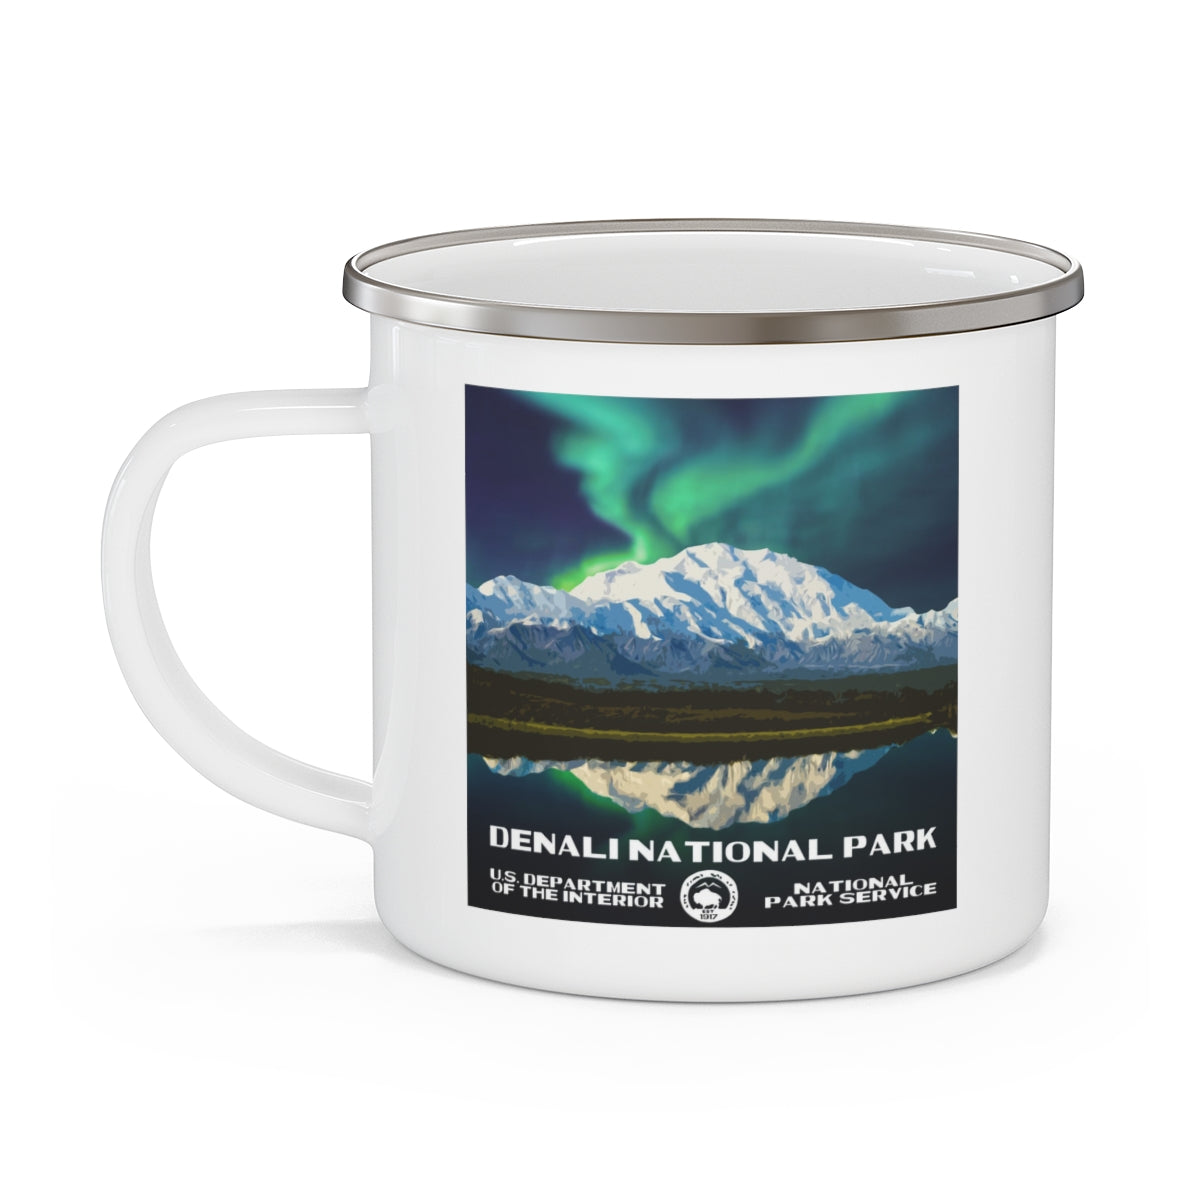 Denali National Park Enamel Camping Mug